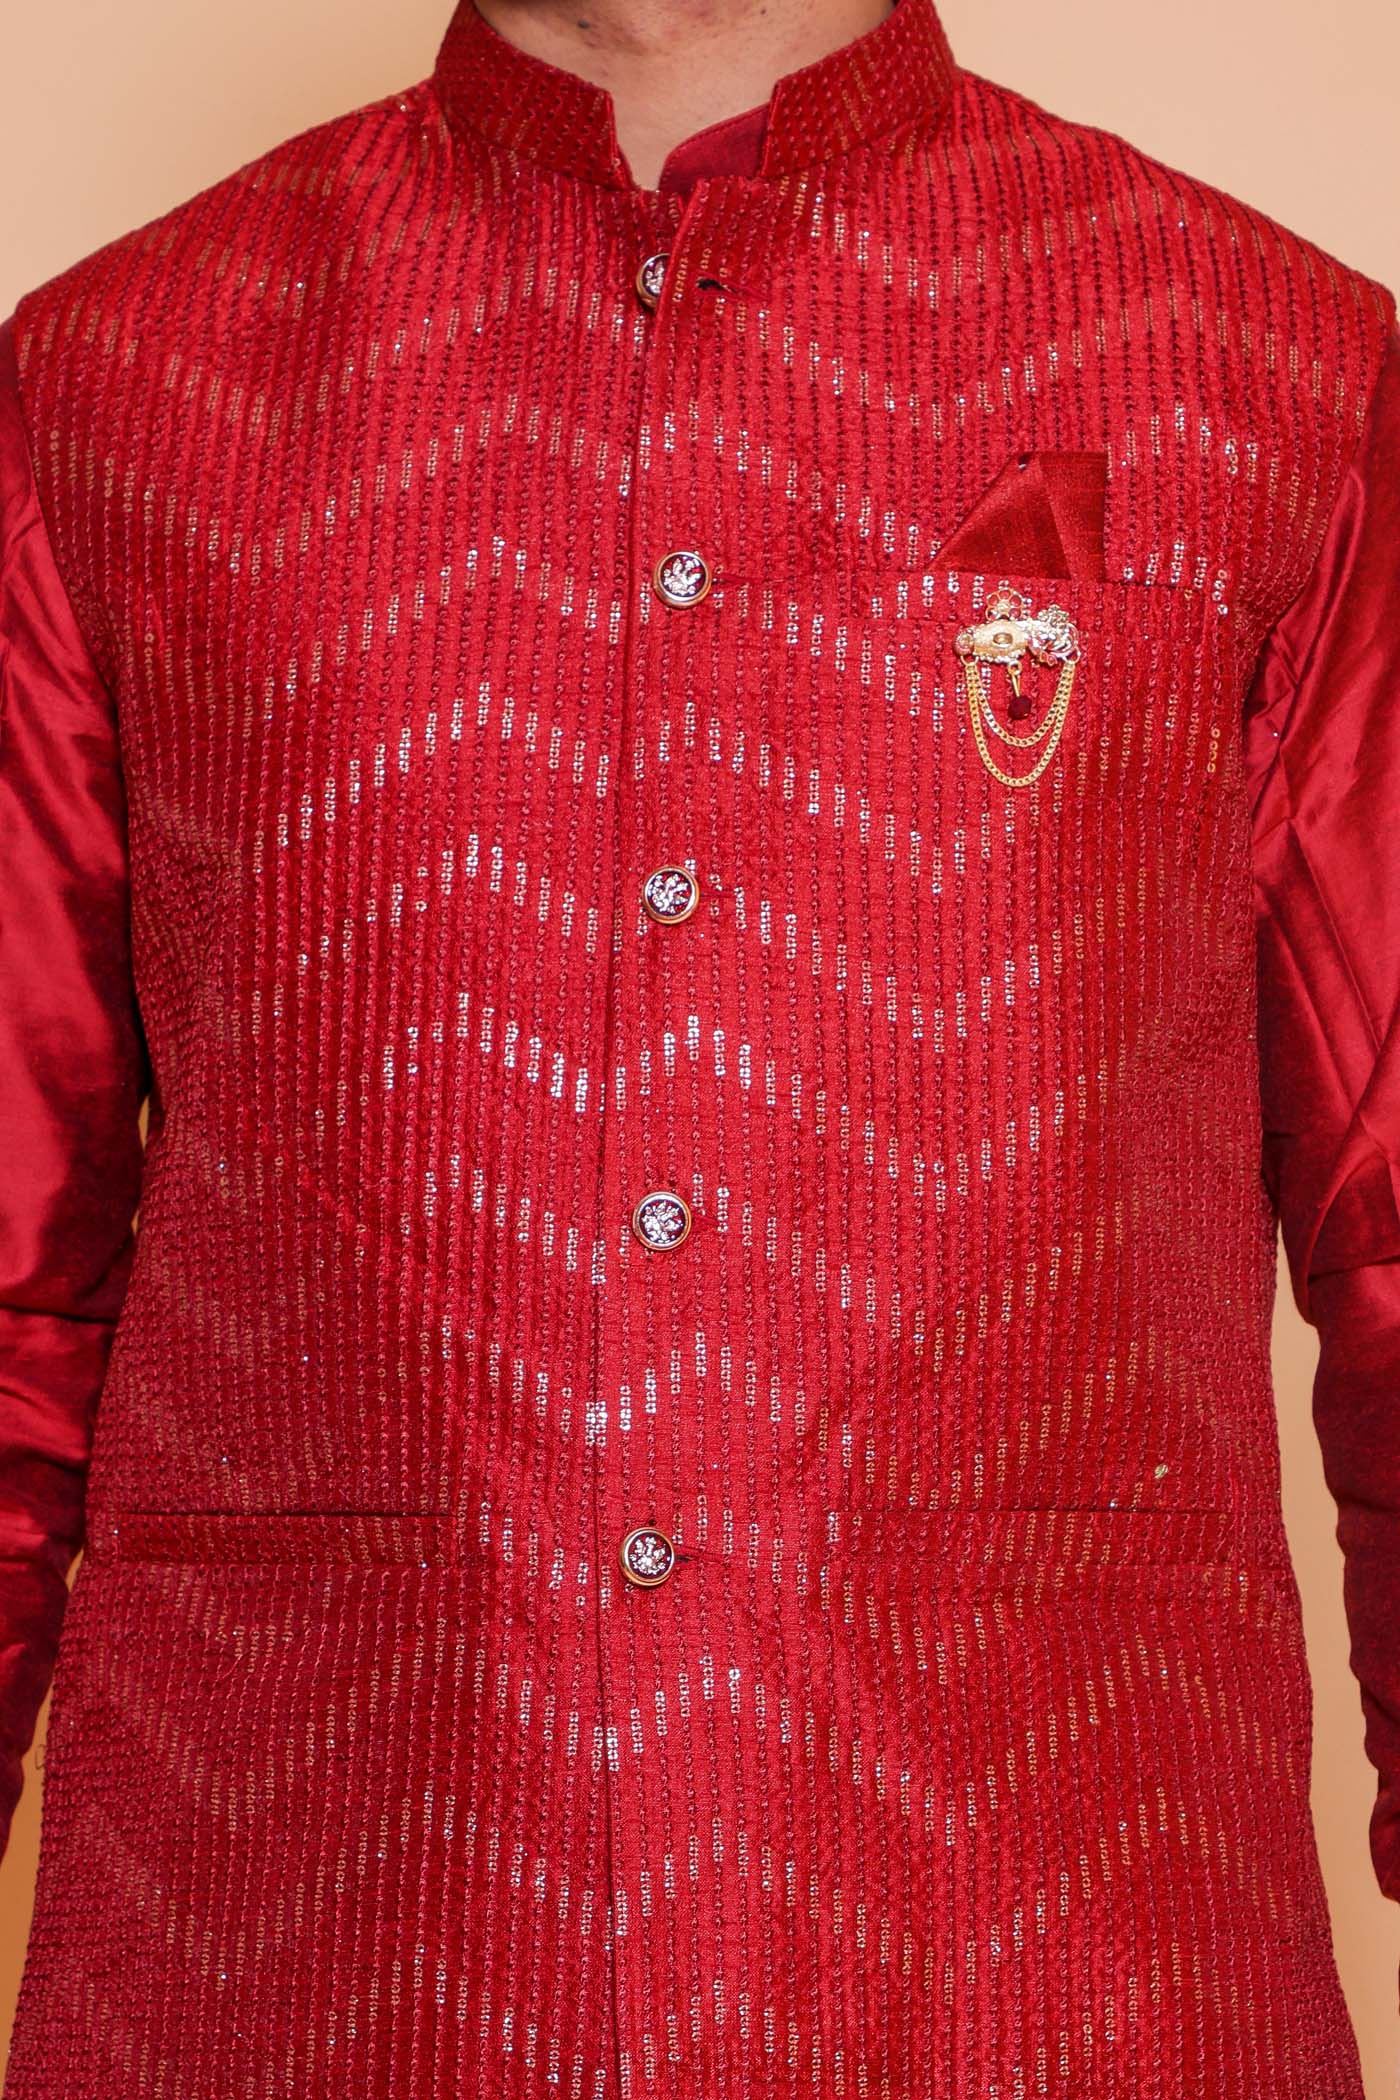 Maroon zig zag pattern embroidered in thread and sequin waistcoat kurta suit